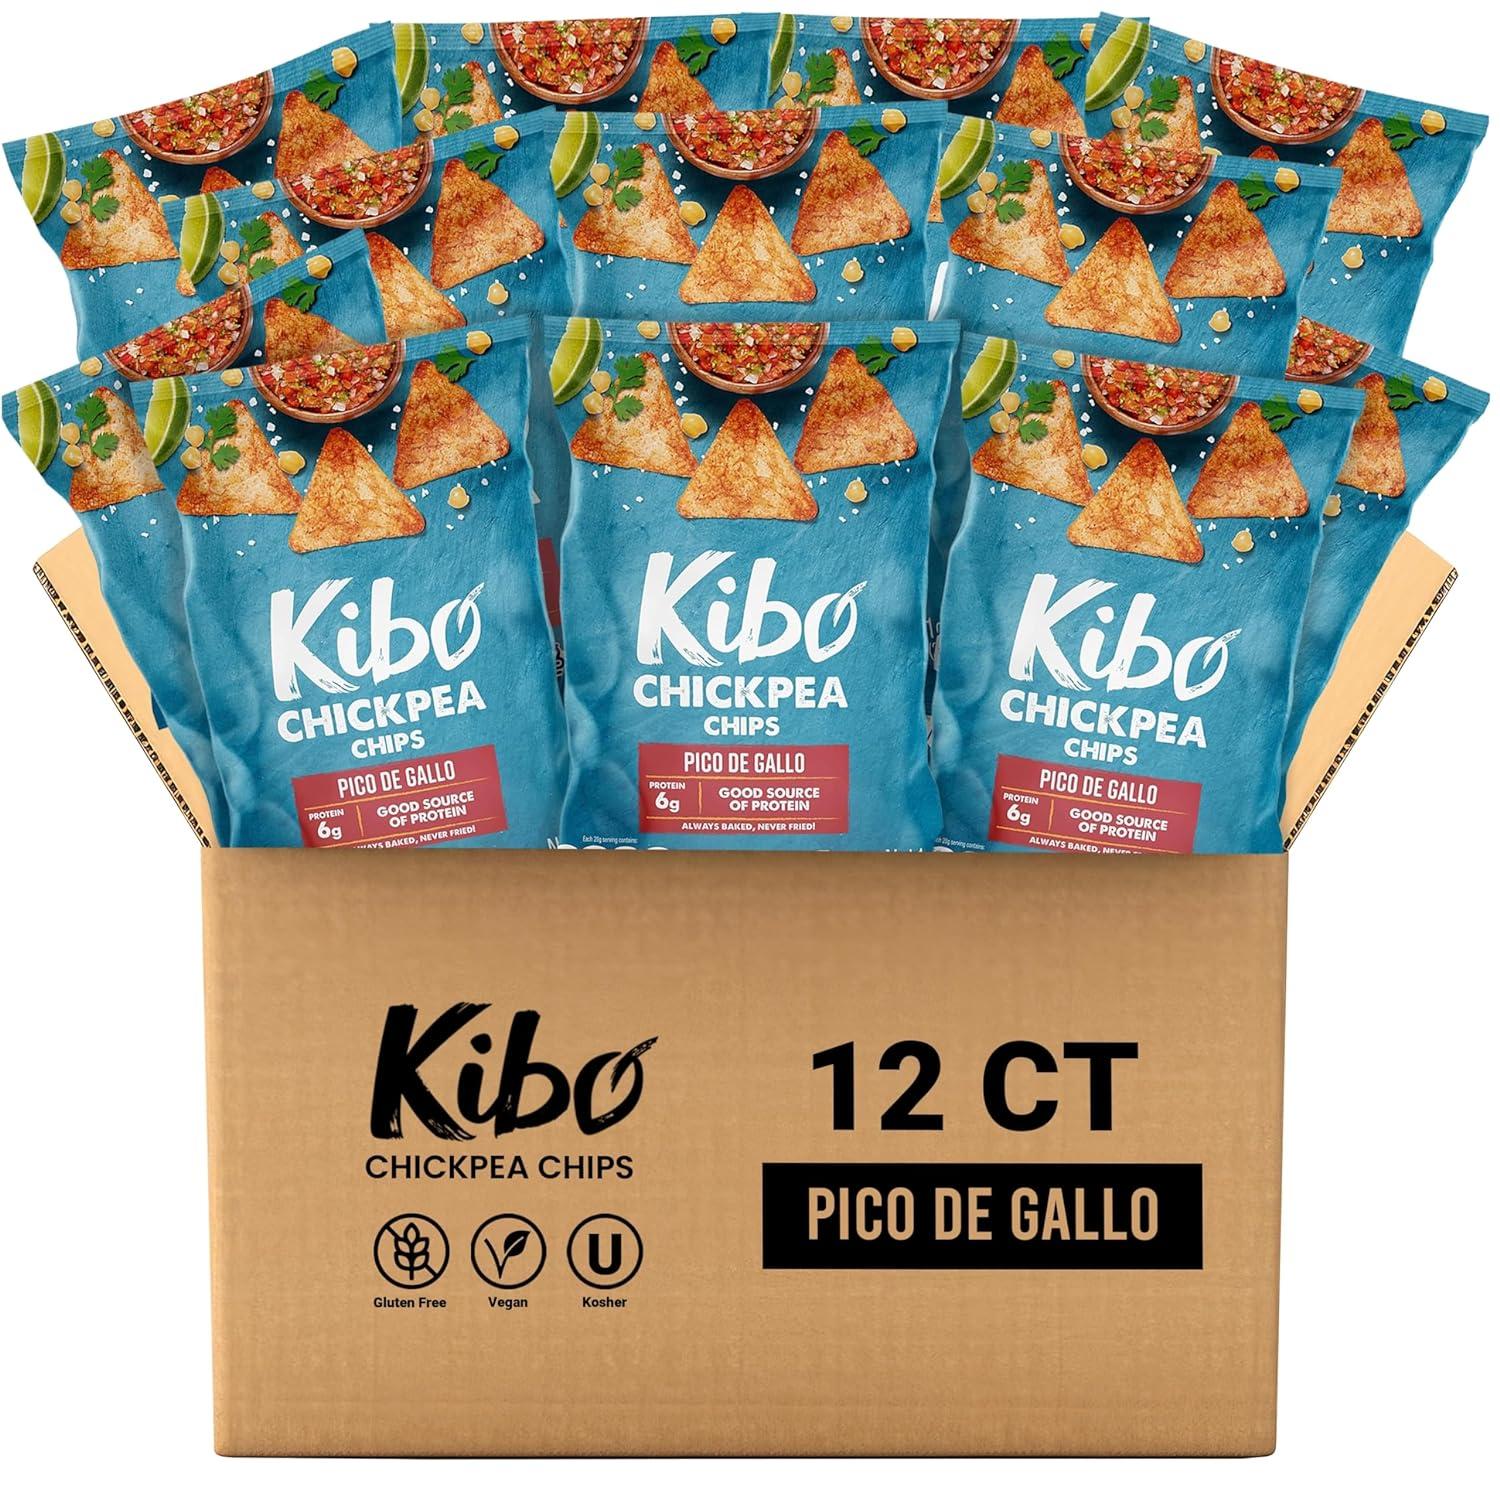 Kibo Chickpea Chips Kosher and Vegan Pico de Gallo 12 Pack for $8.69